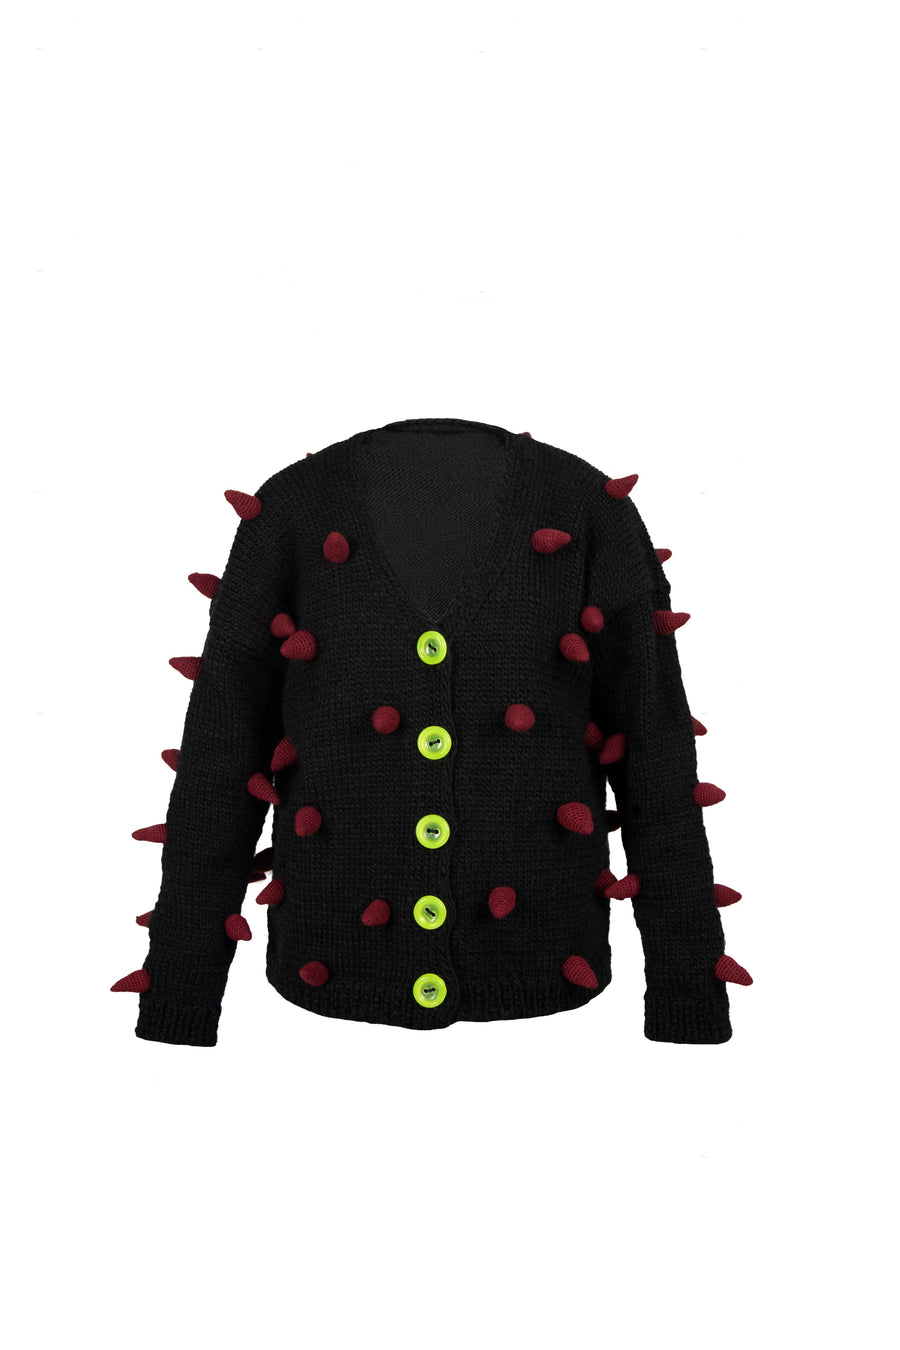 Spiky Black Sweater